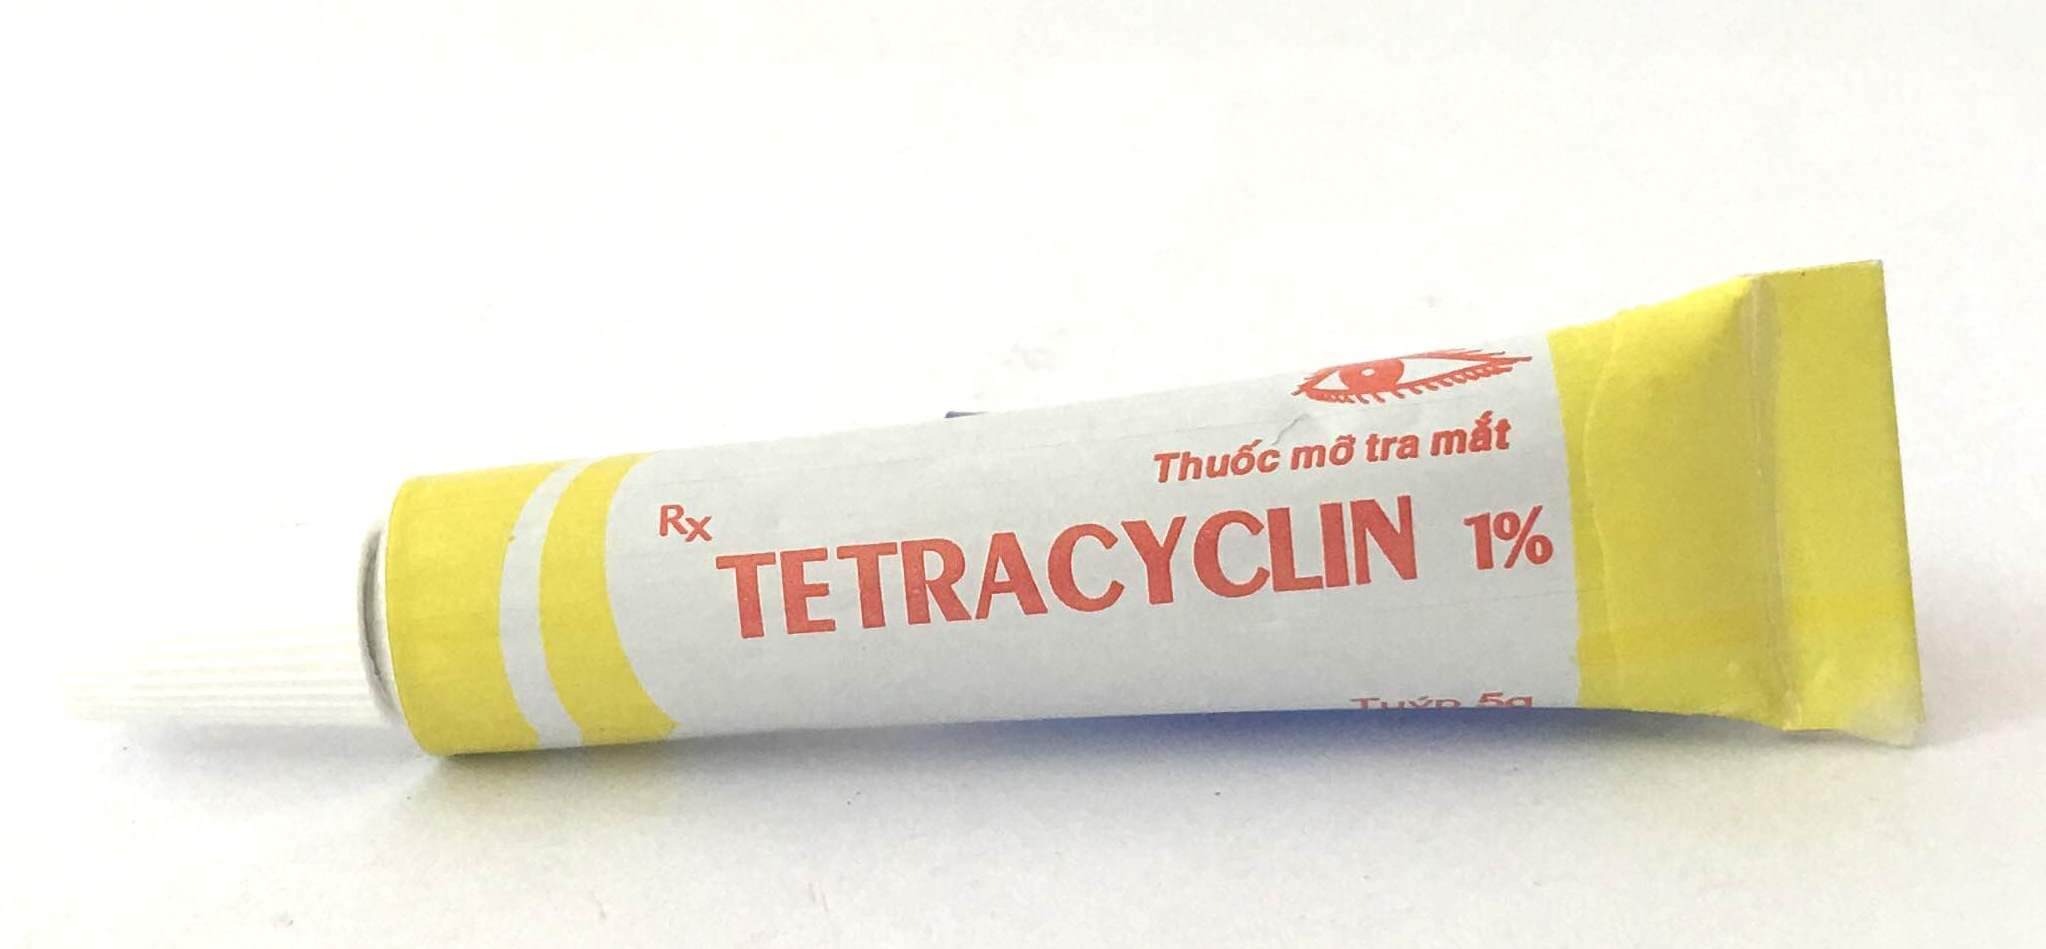 Thuốc mỡ tra mắt Tetracyclin 1%